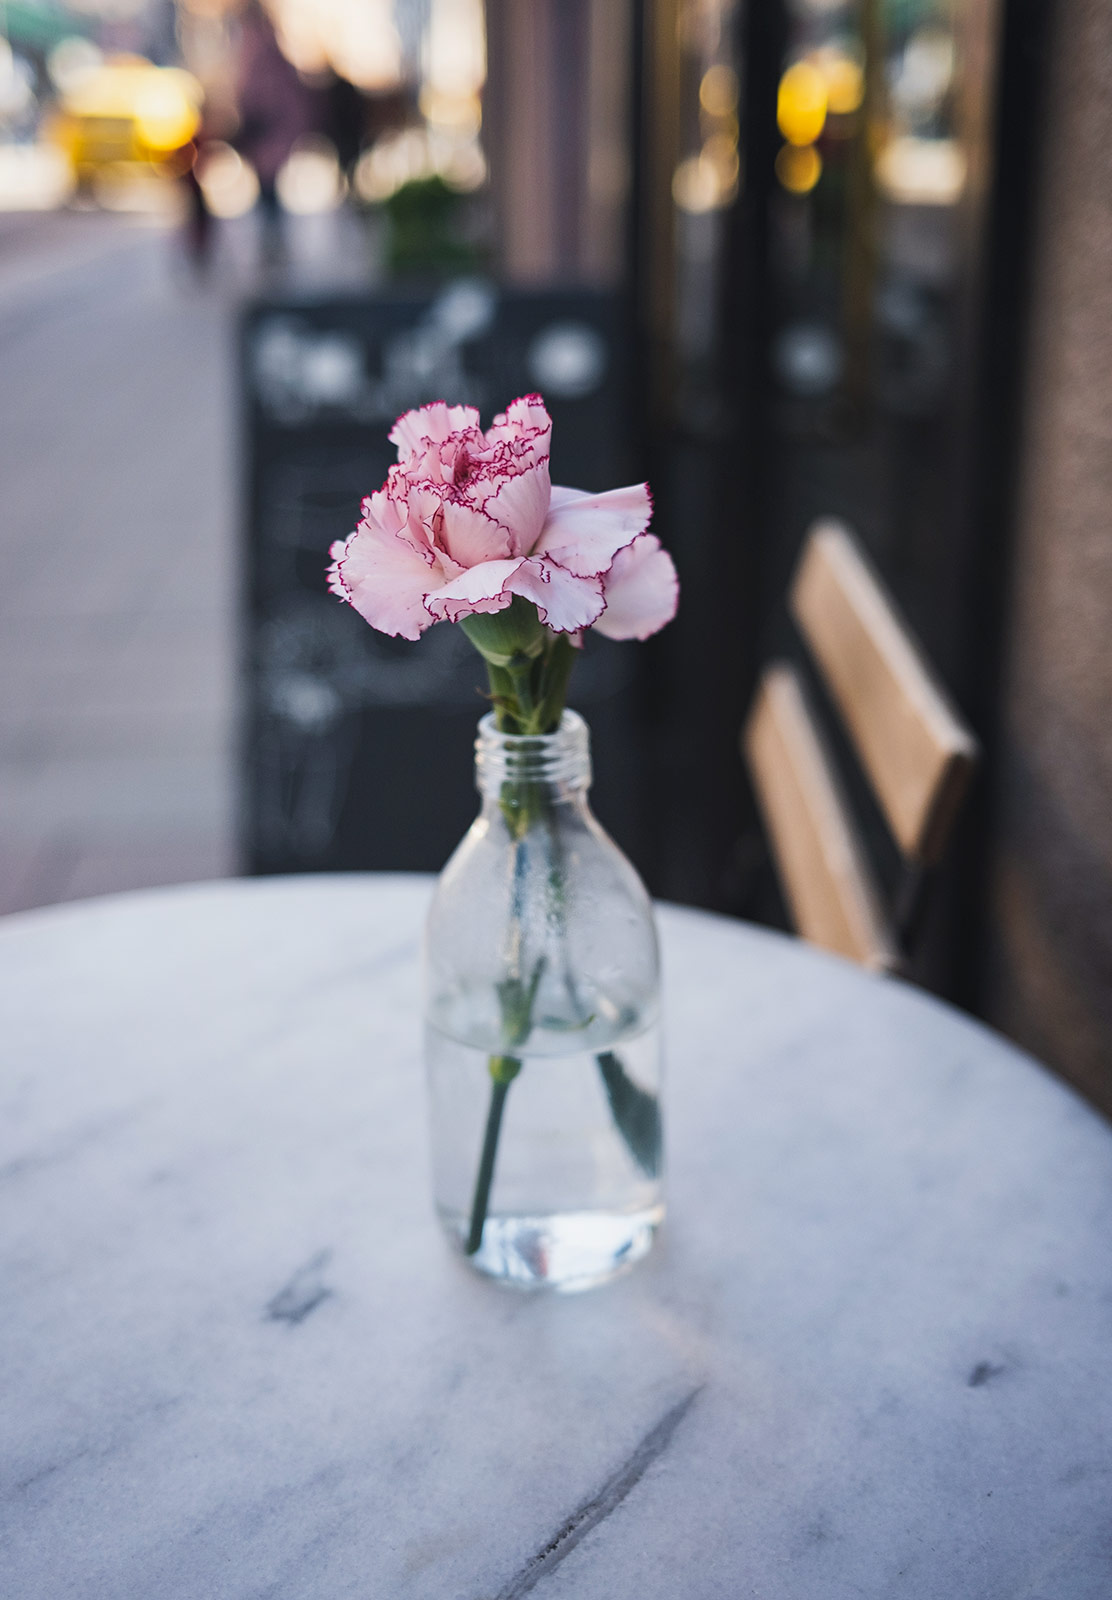 Single flower in small vase